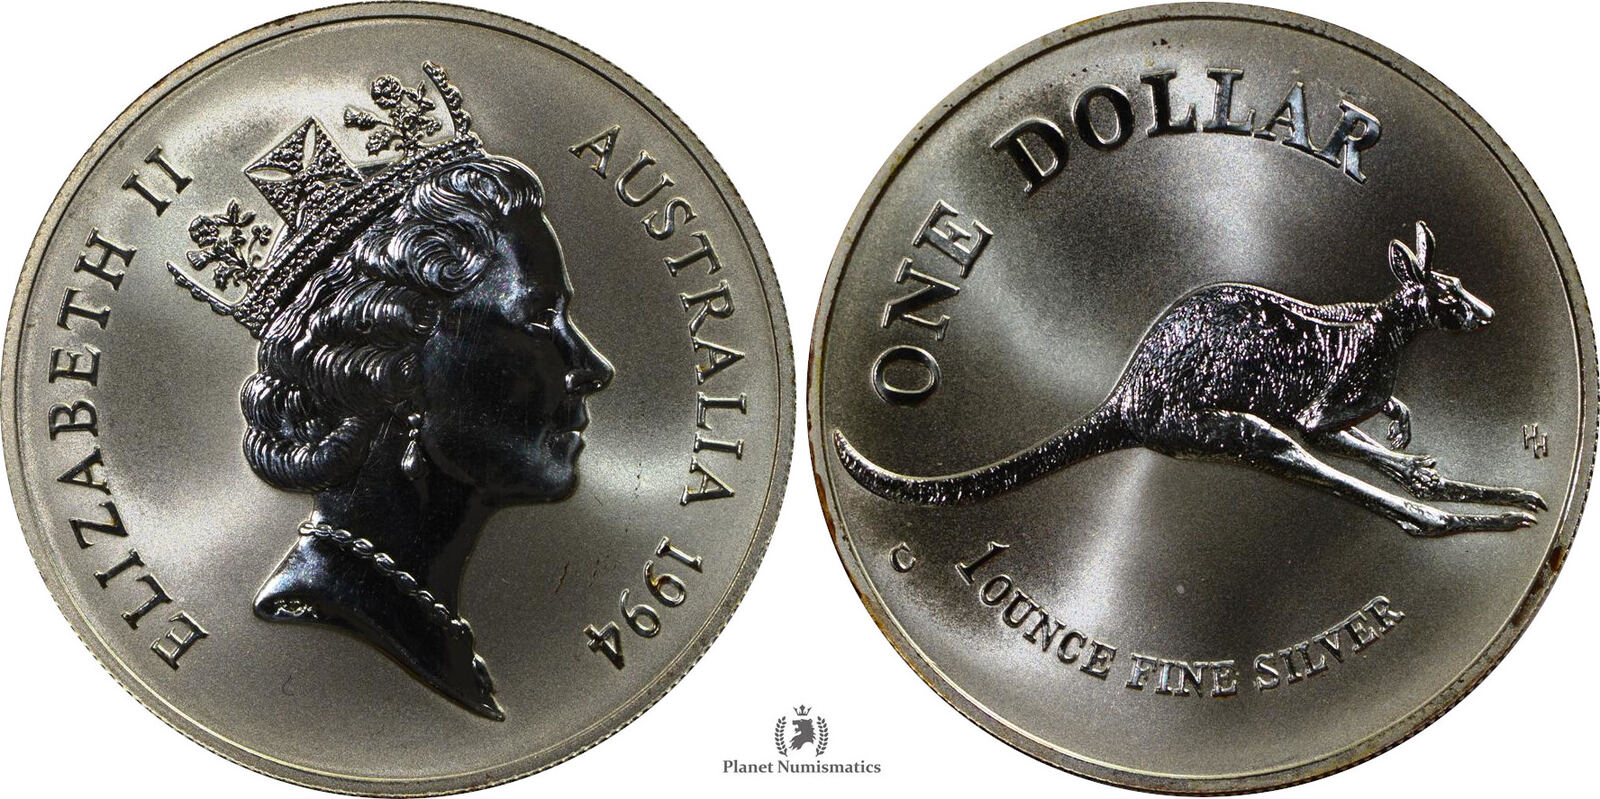 1 Доллар Австралия серебро черепаха. Монета Австралия серебро 2006г. Птицы. 1 Доллар 2023 Австралия серебро. Медаль 1 цент США серебро 2 унции 1994. 1 доллар австралия серебро